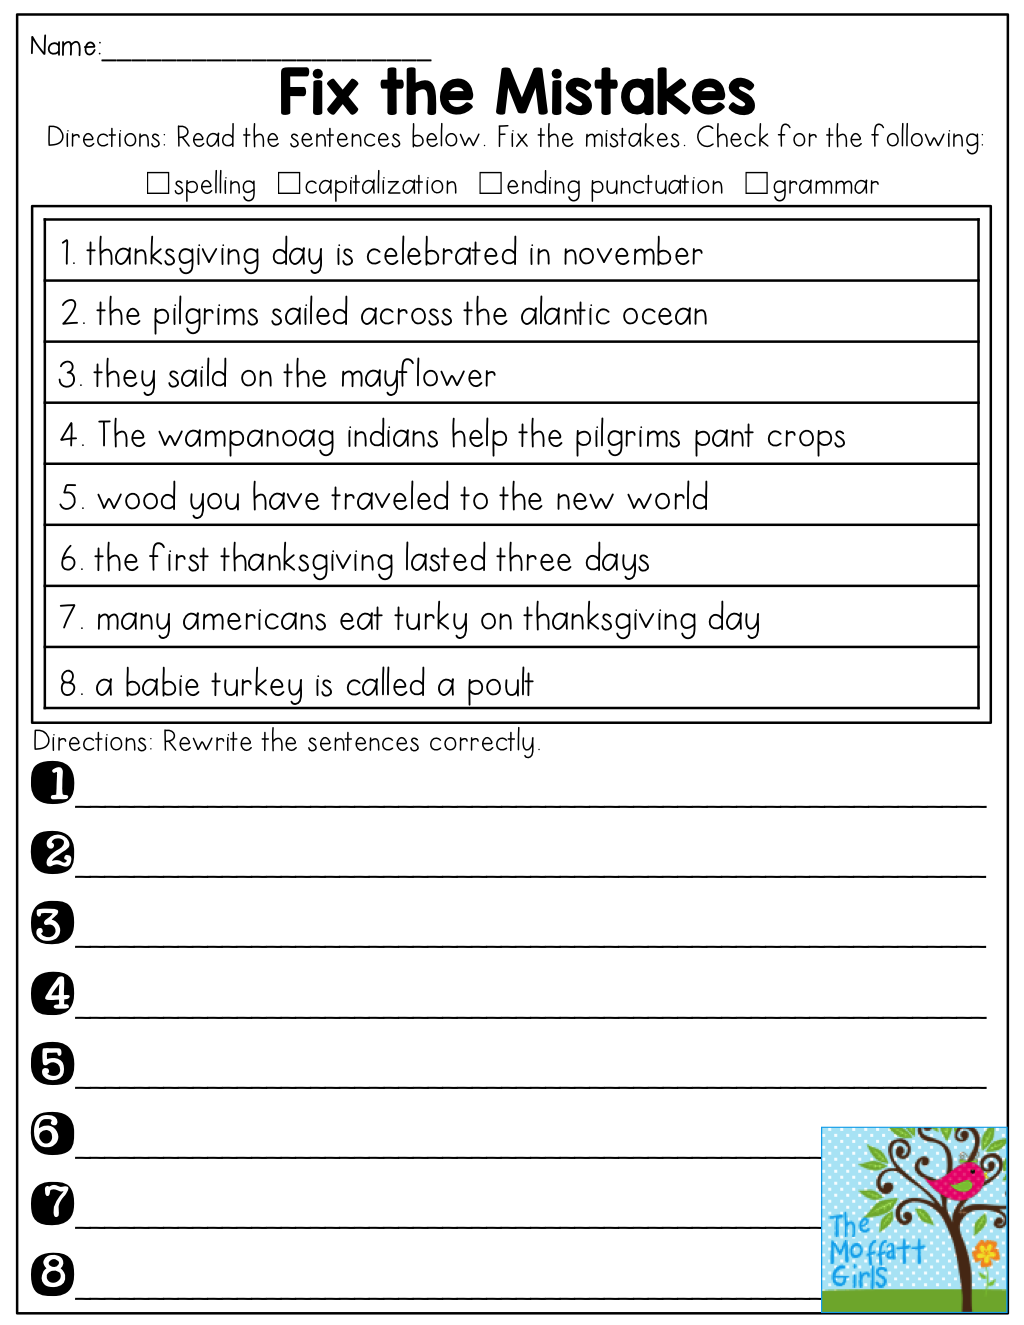 Sentence Correction Worksheet 4th Grade